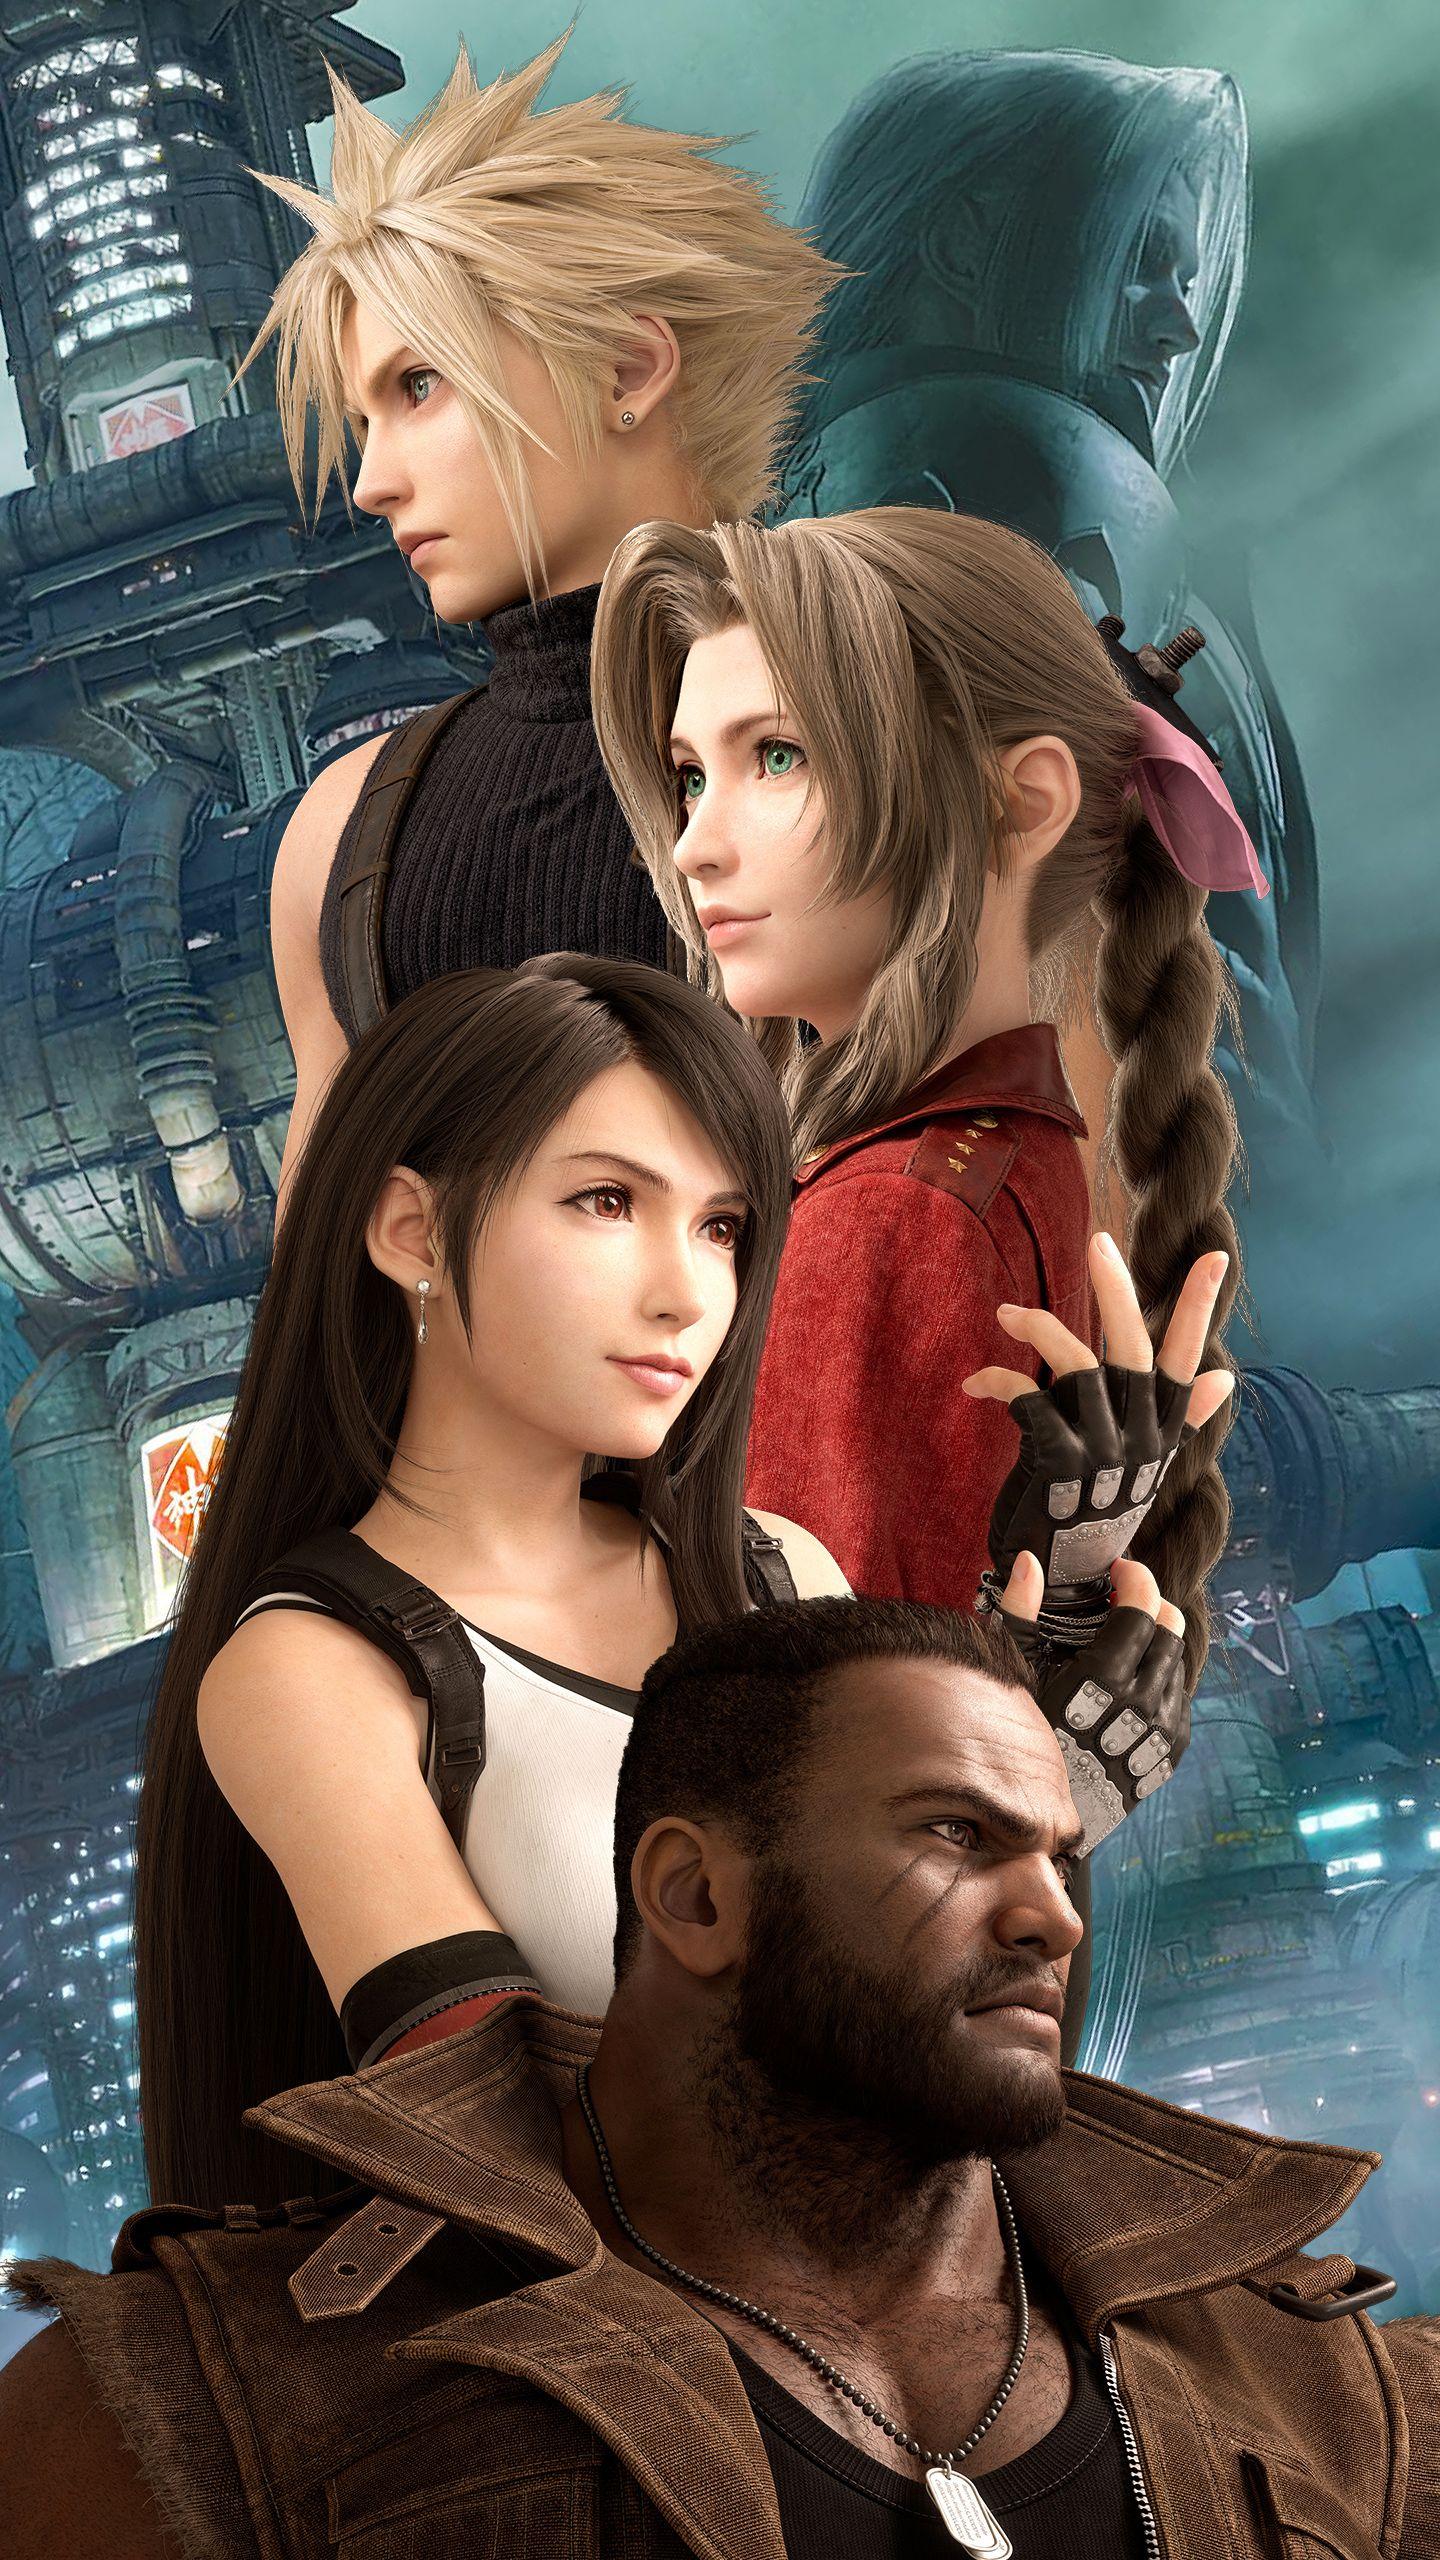 Final Fantasy 7 Remake Wallpaper